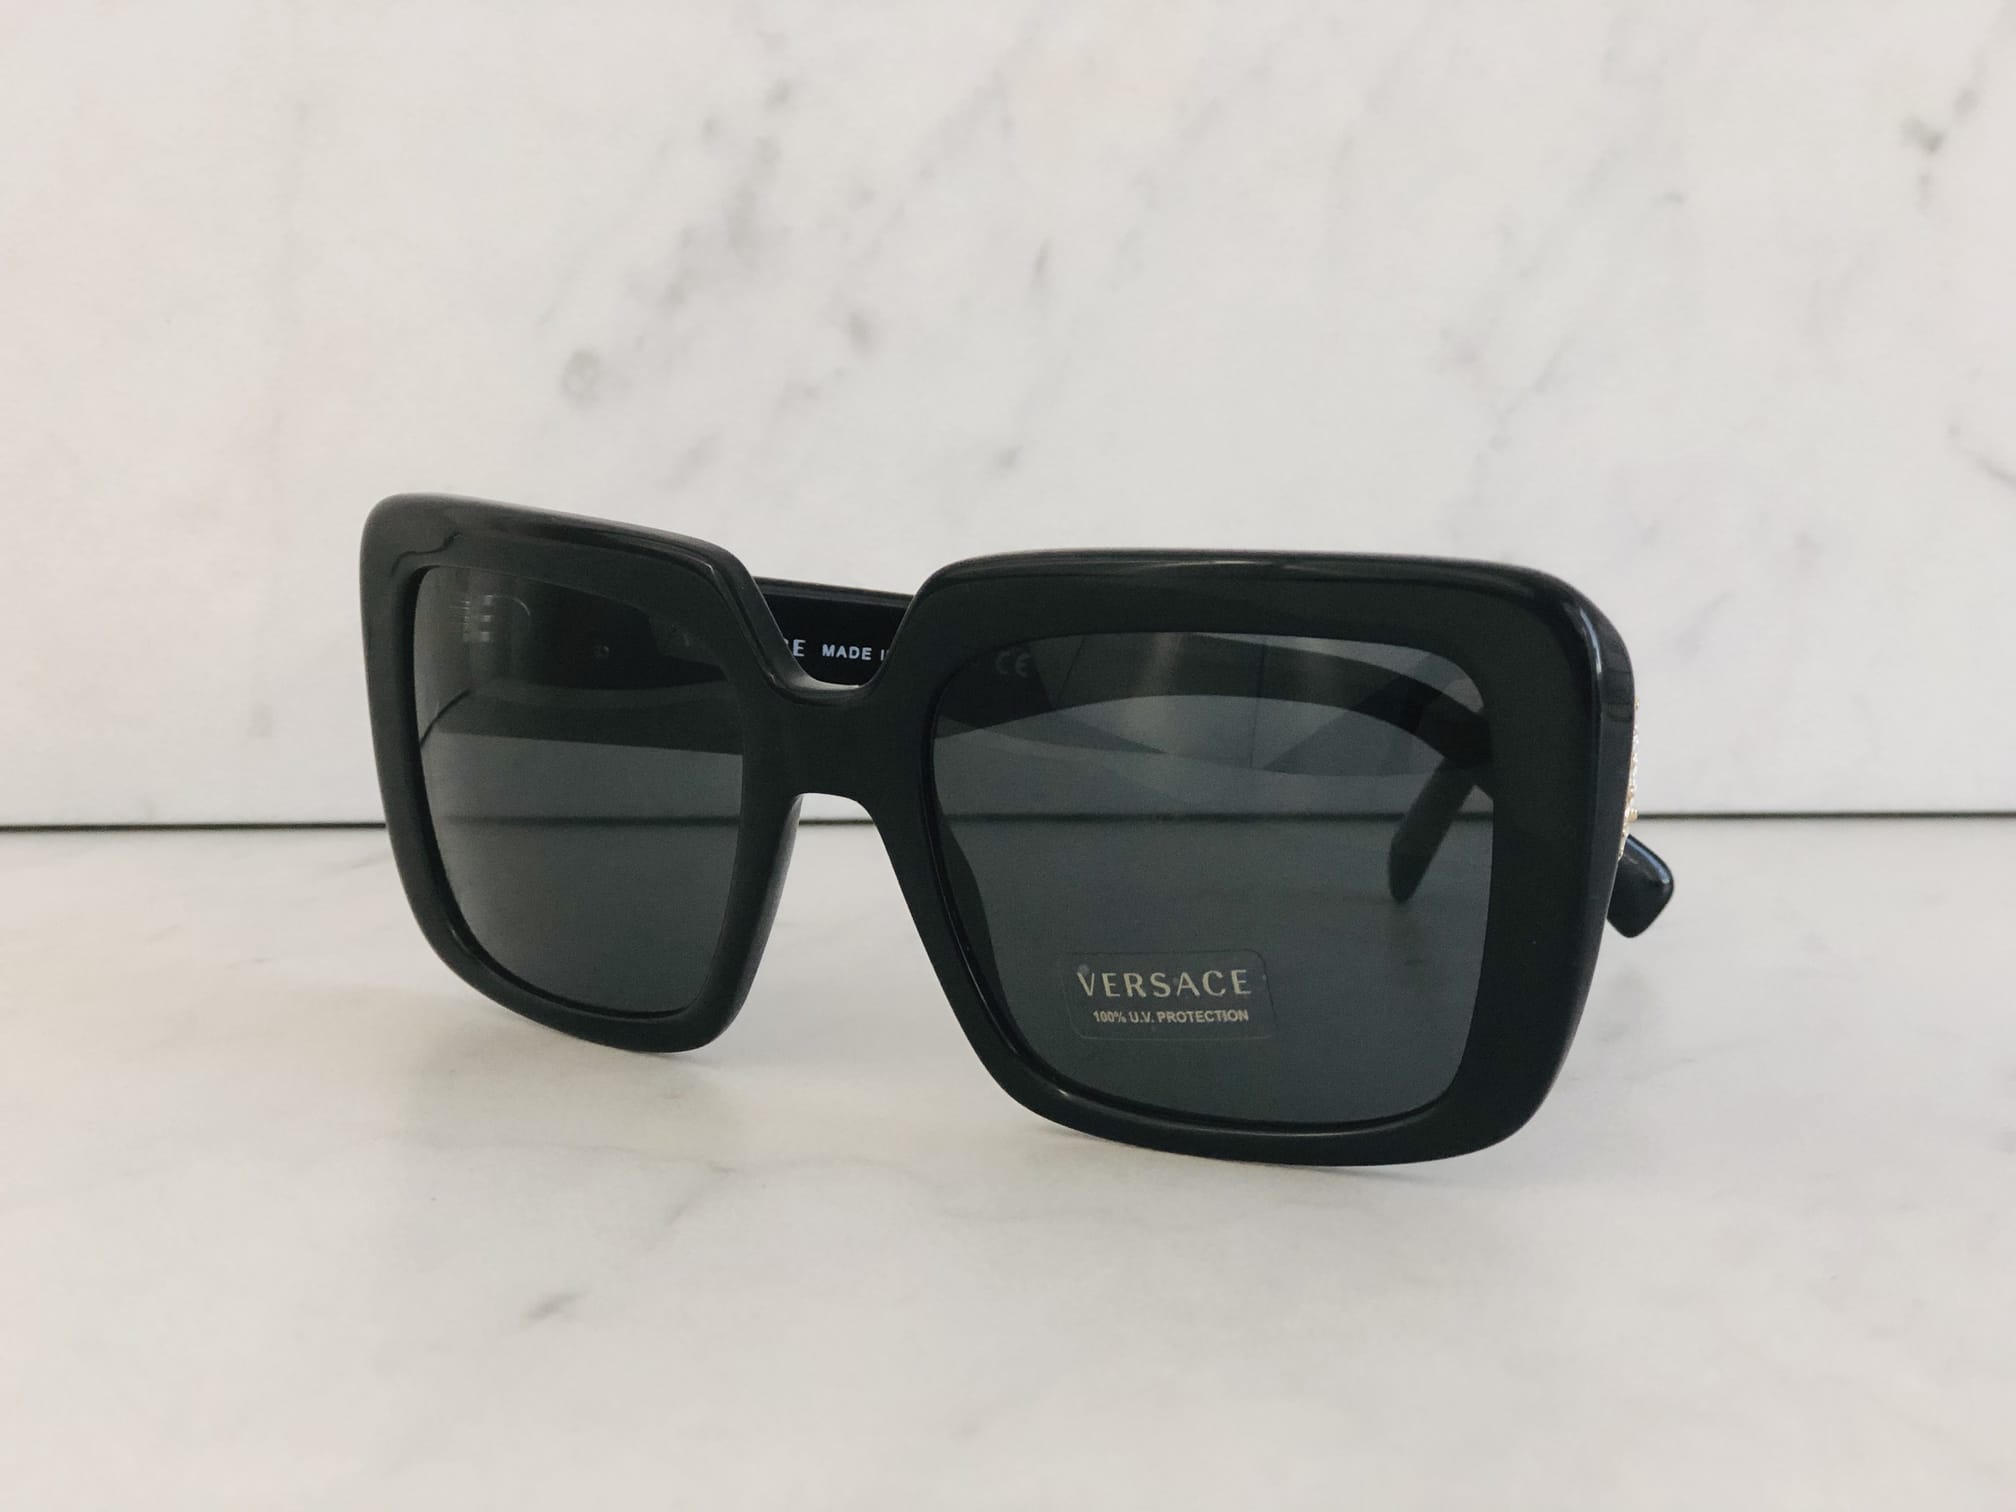 Versace Sunglasses 4384-B - Latest Eyewear & Excellent Eyecare